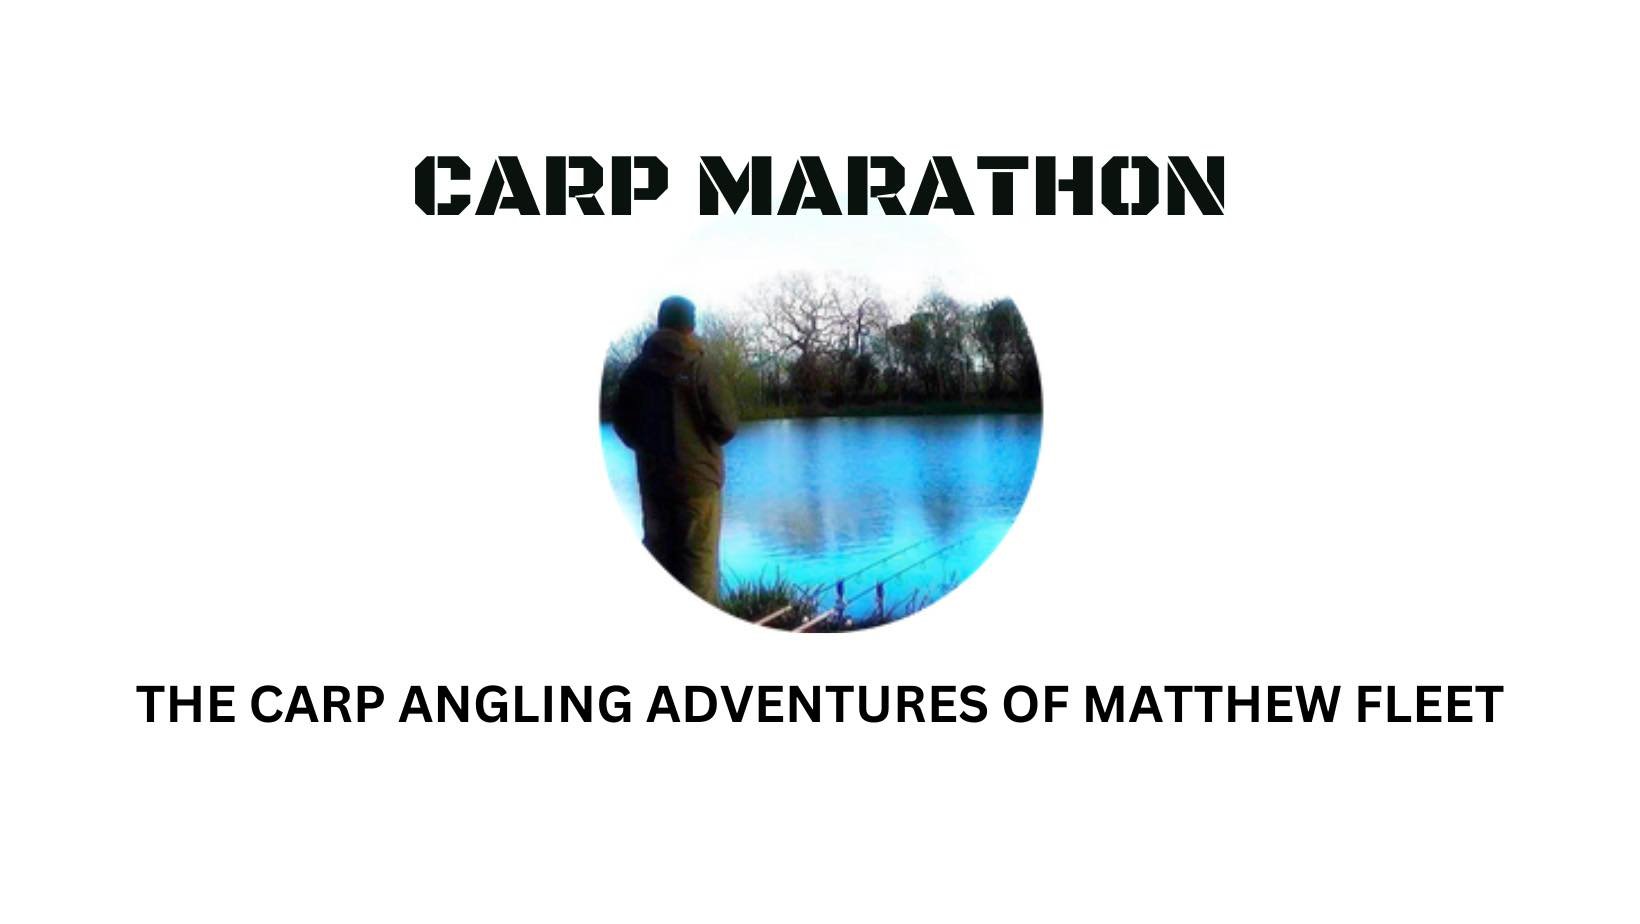 Carp Marathon the carp angling adventures of Matthew Fleet